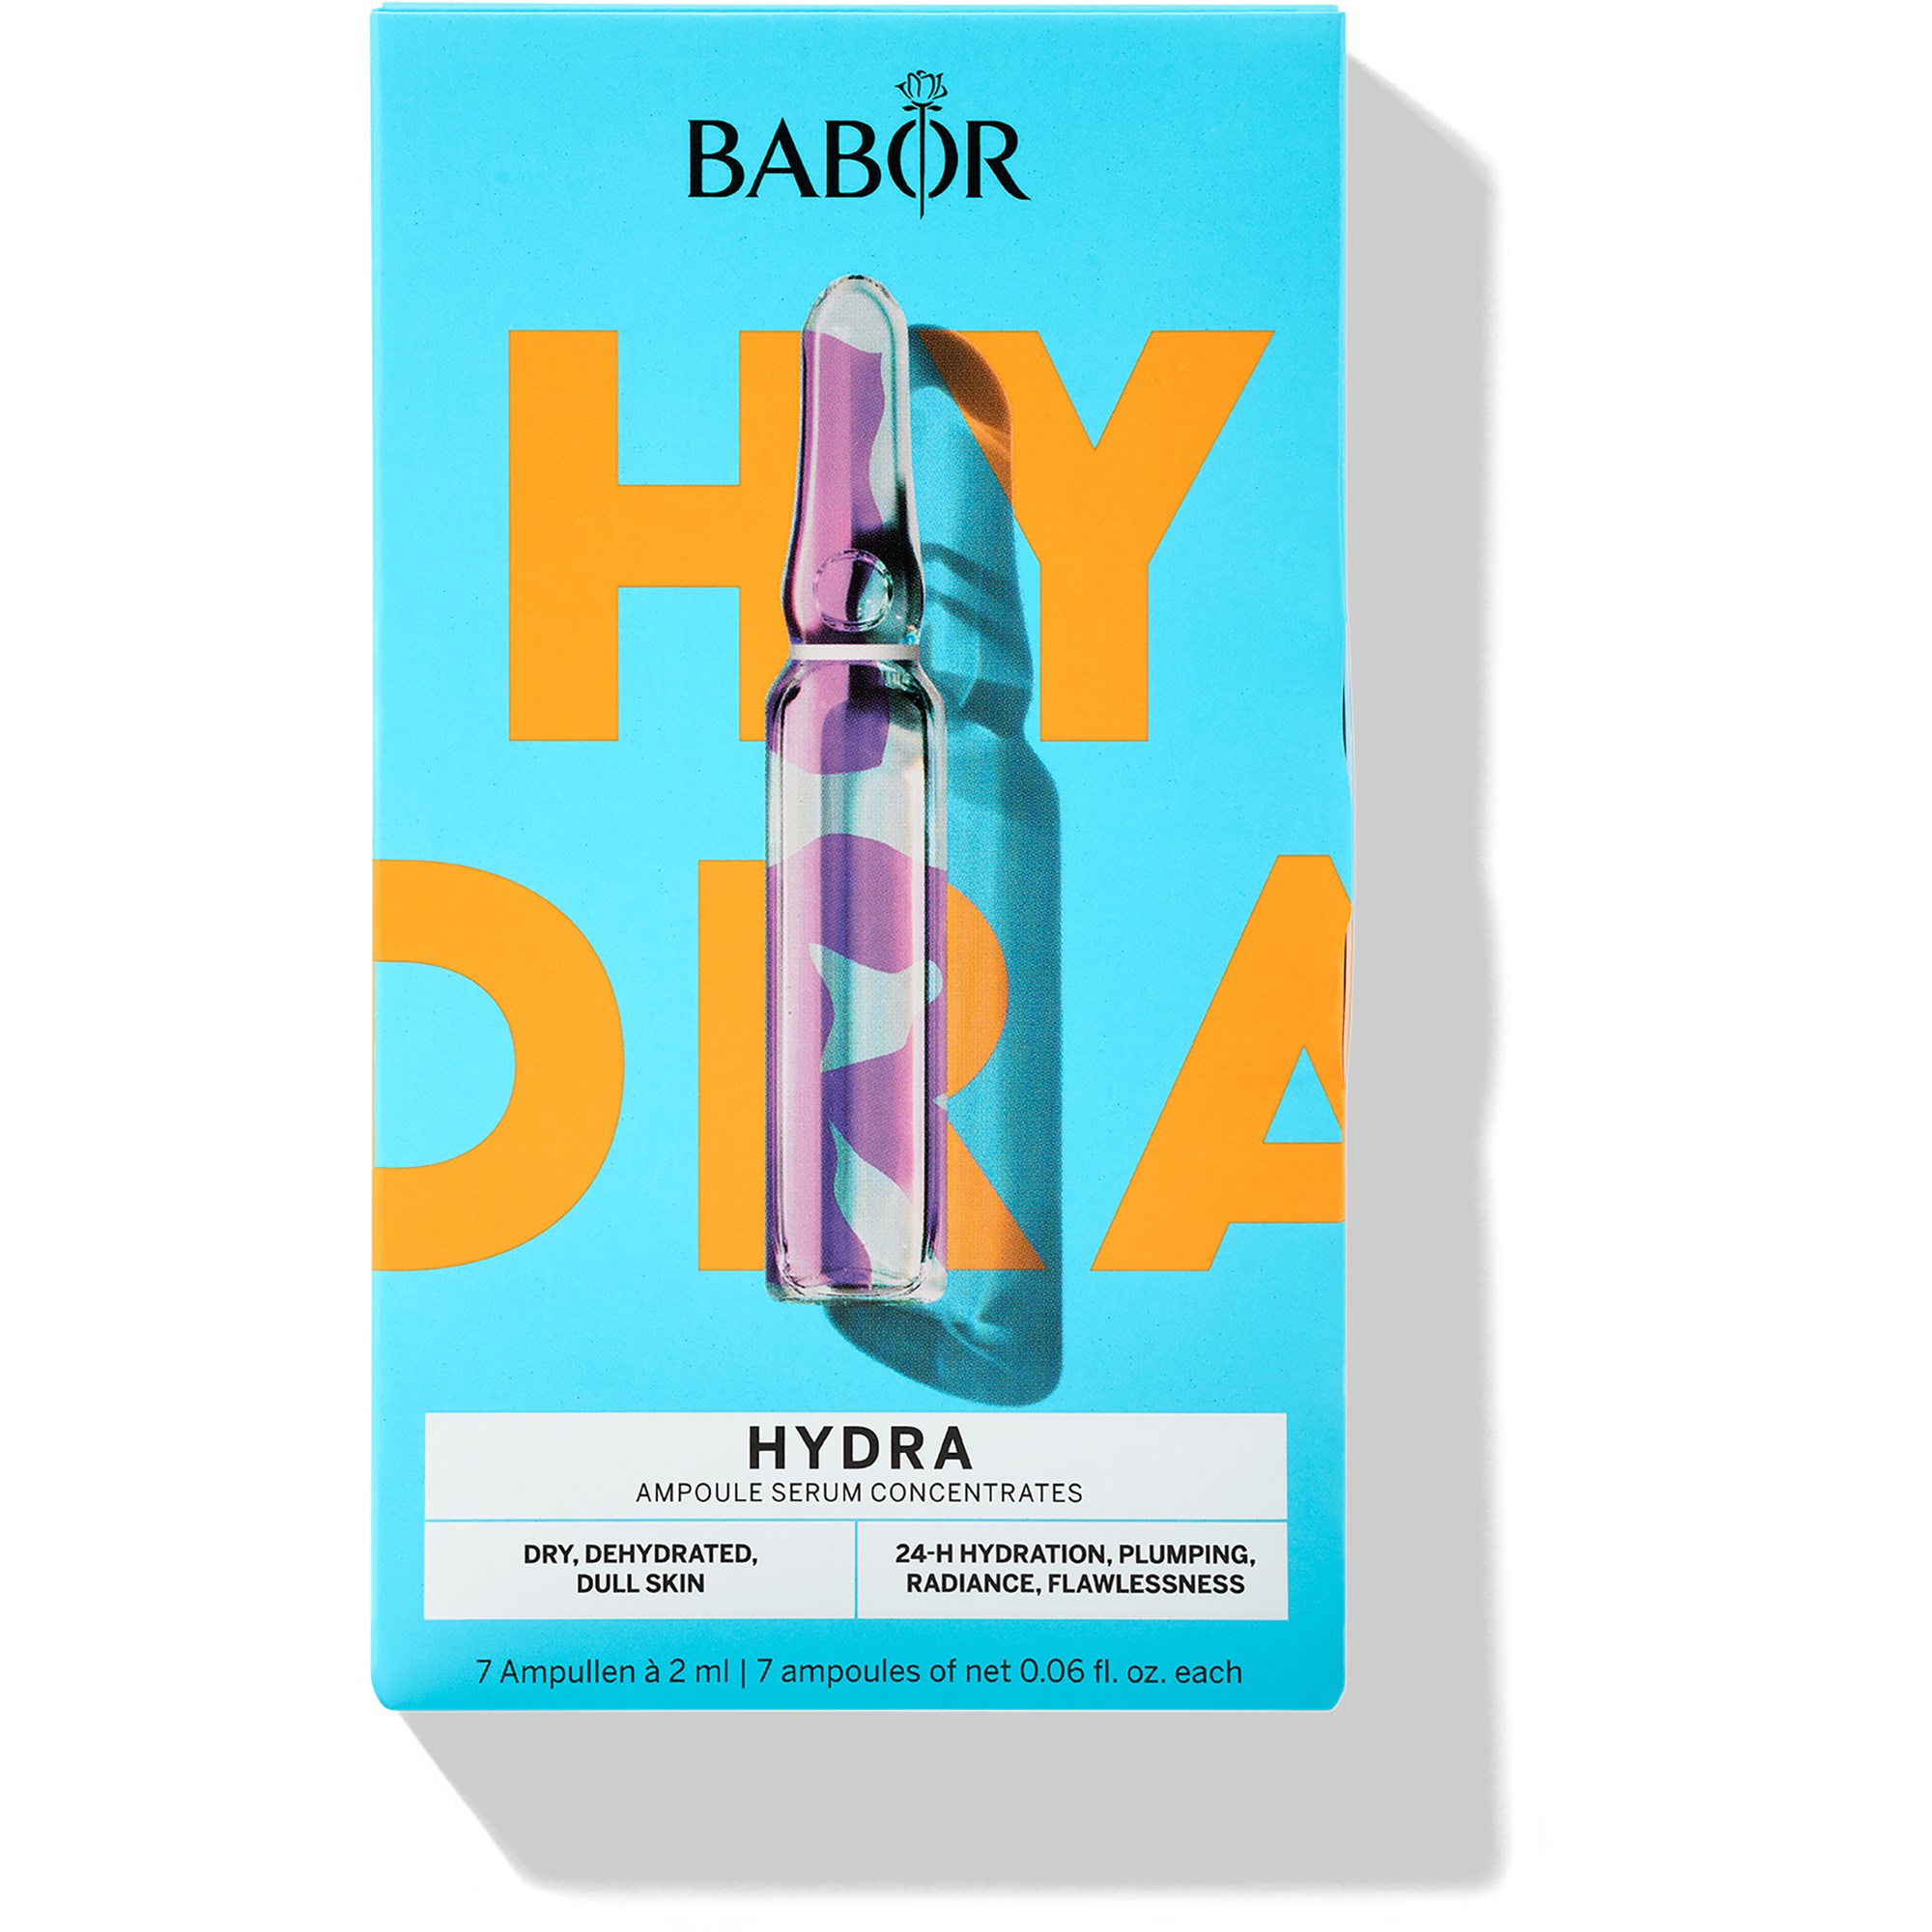 BABOR Ampoule Concentrates Limited Edition HYDRA Ampoule Set